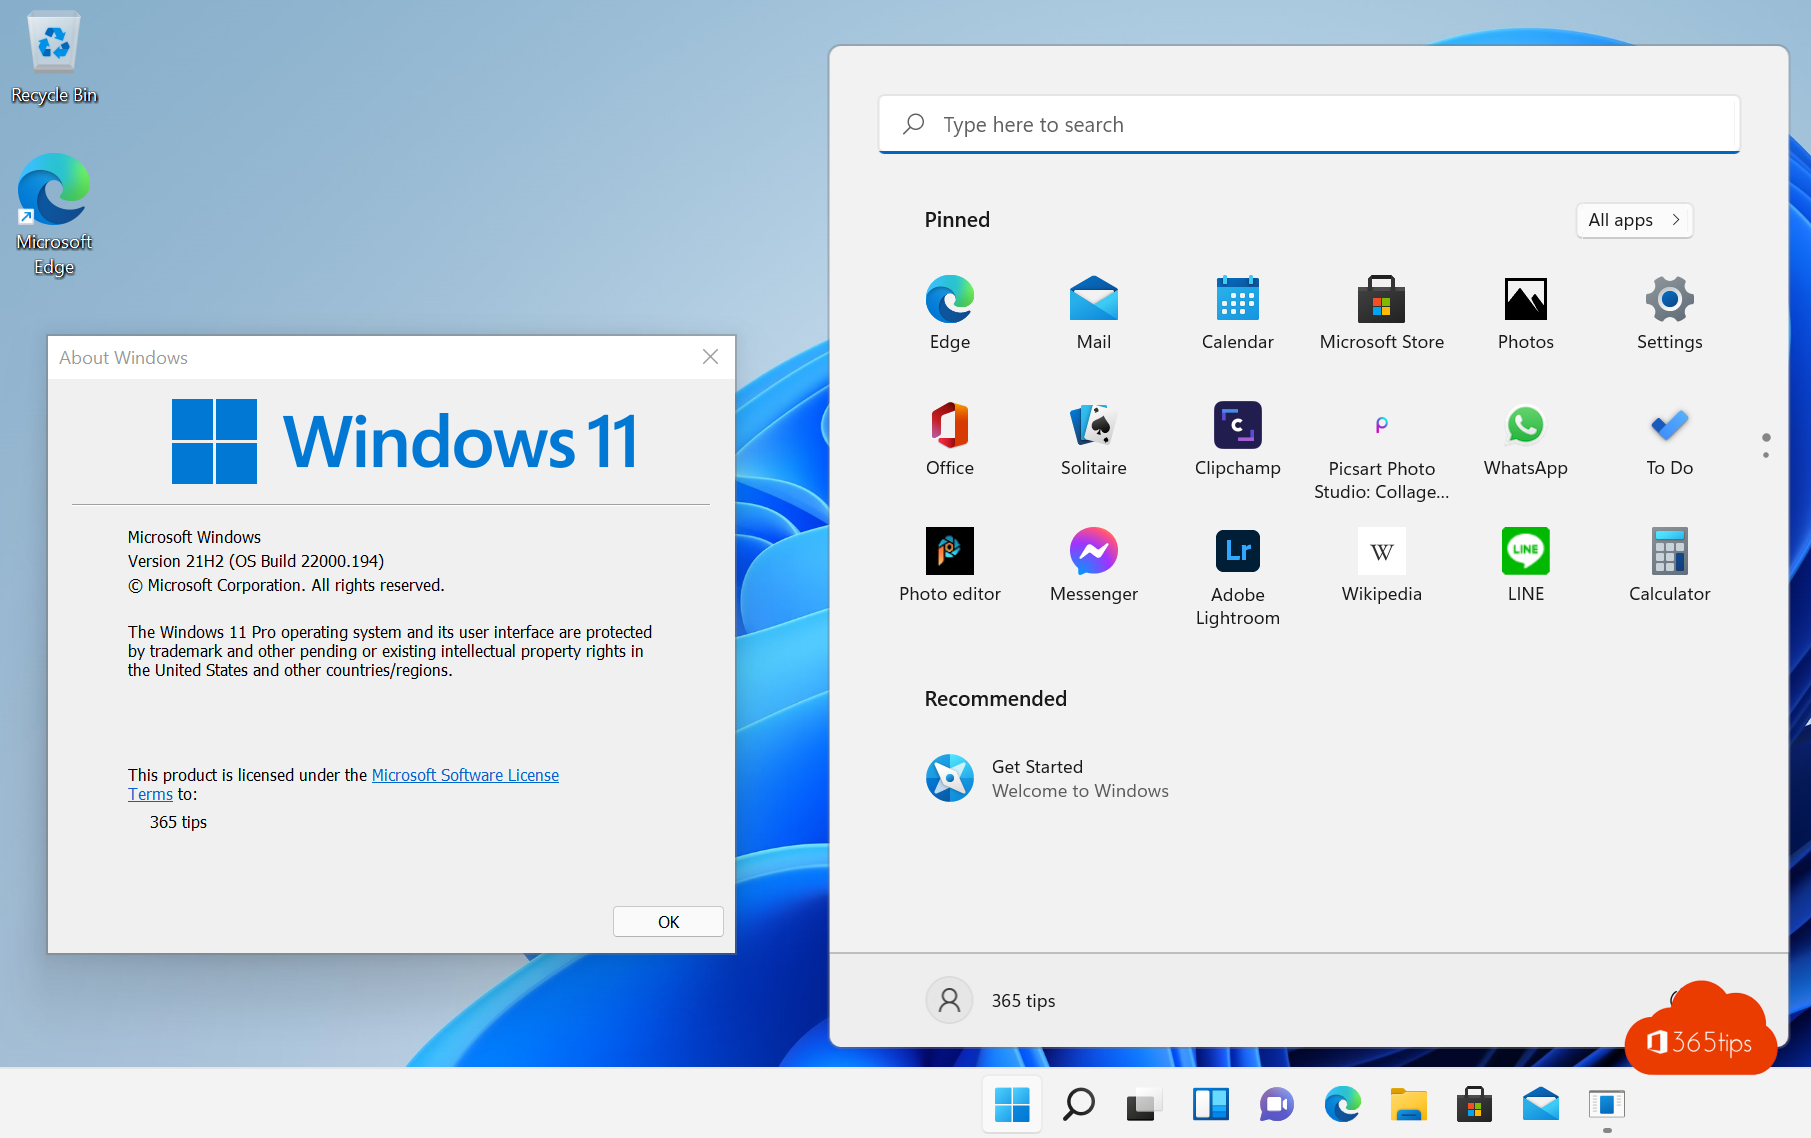 instaling Windows 11 Installation Assistant 1.4.19041.3630